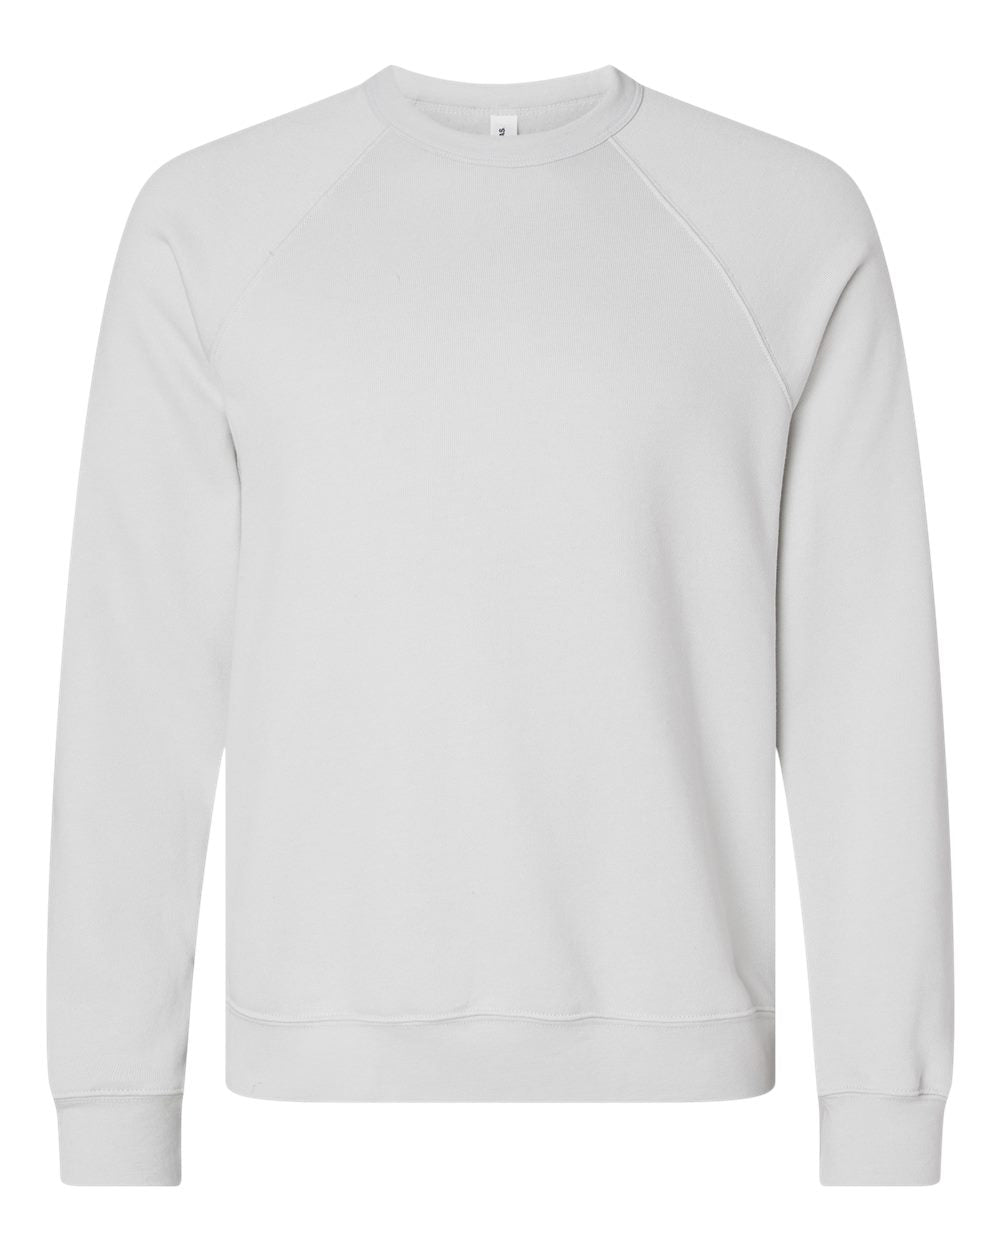 Bella + Canvas Fleece Crewneck Sweatshirt Size XS - Small